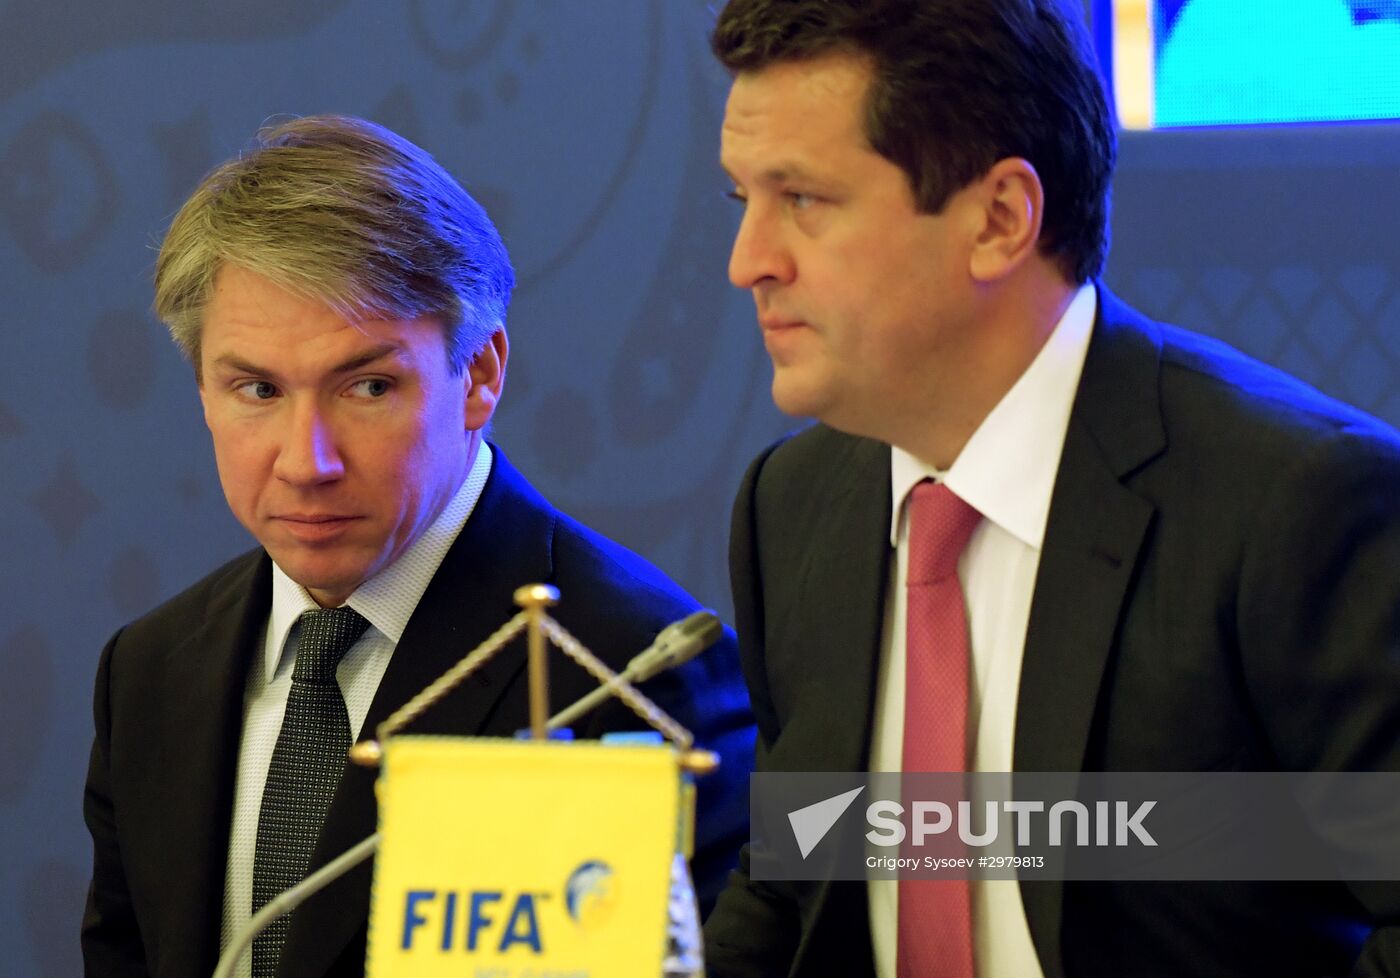 FIFA Confederations Cup teams hold seminar